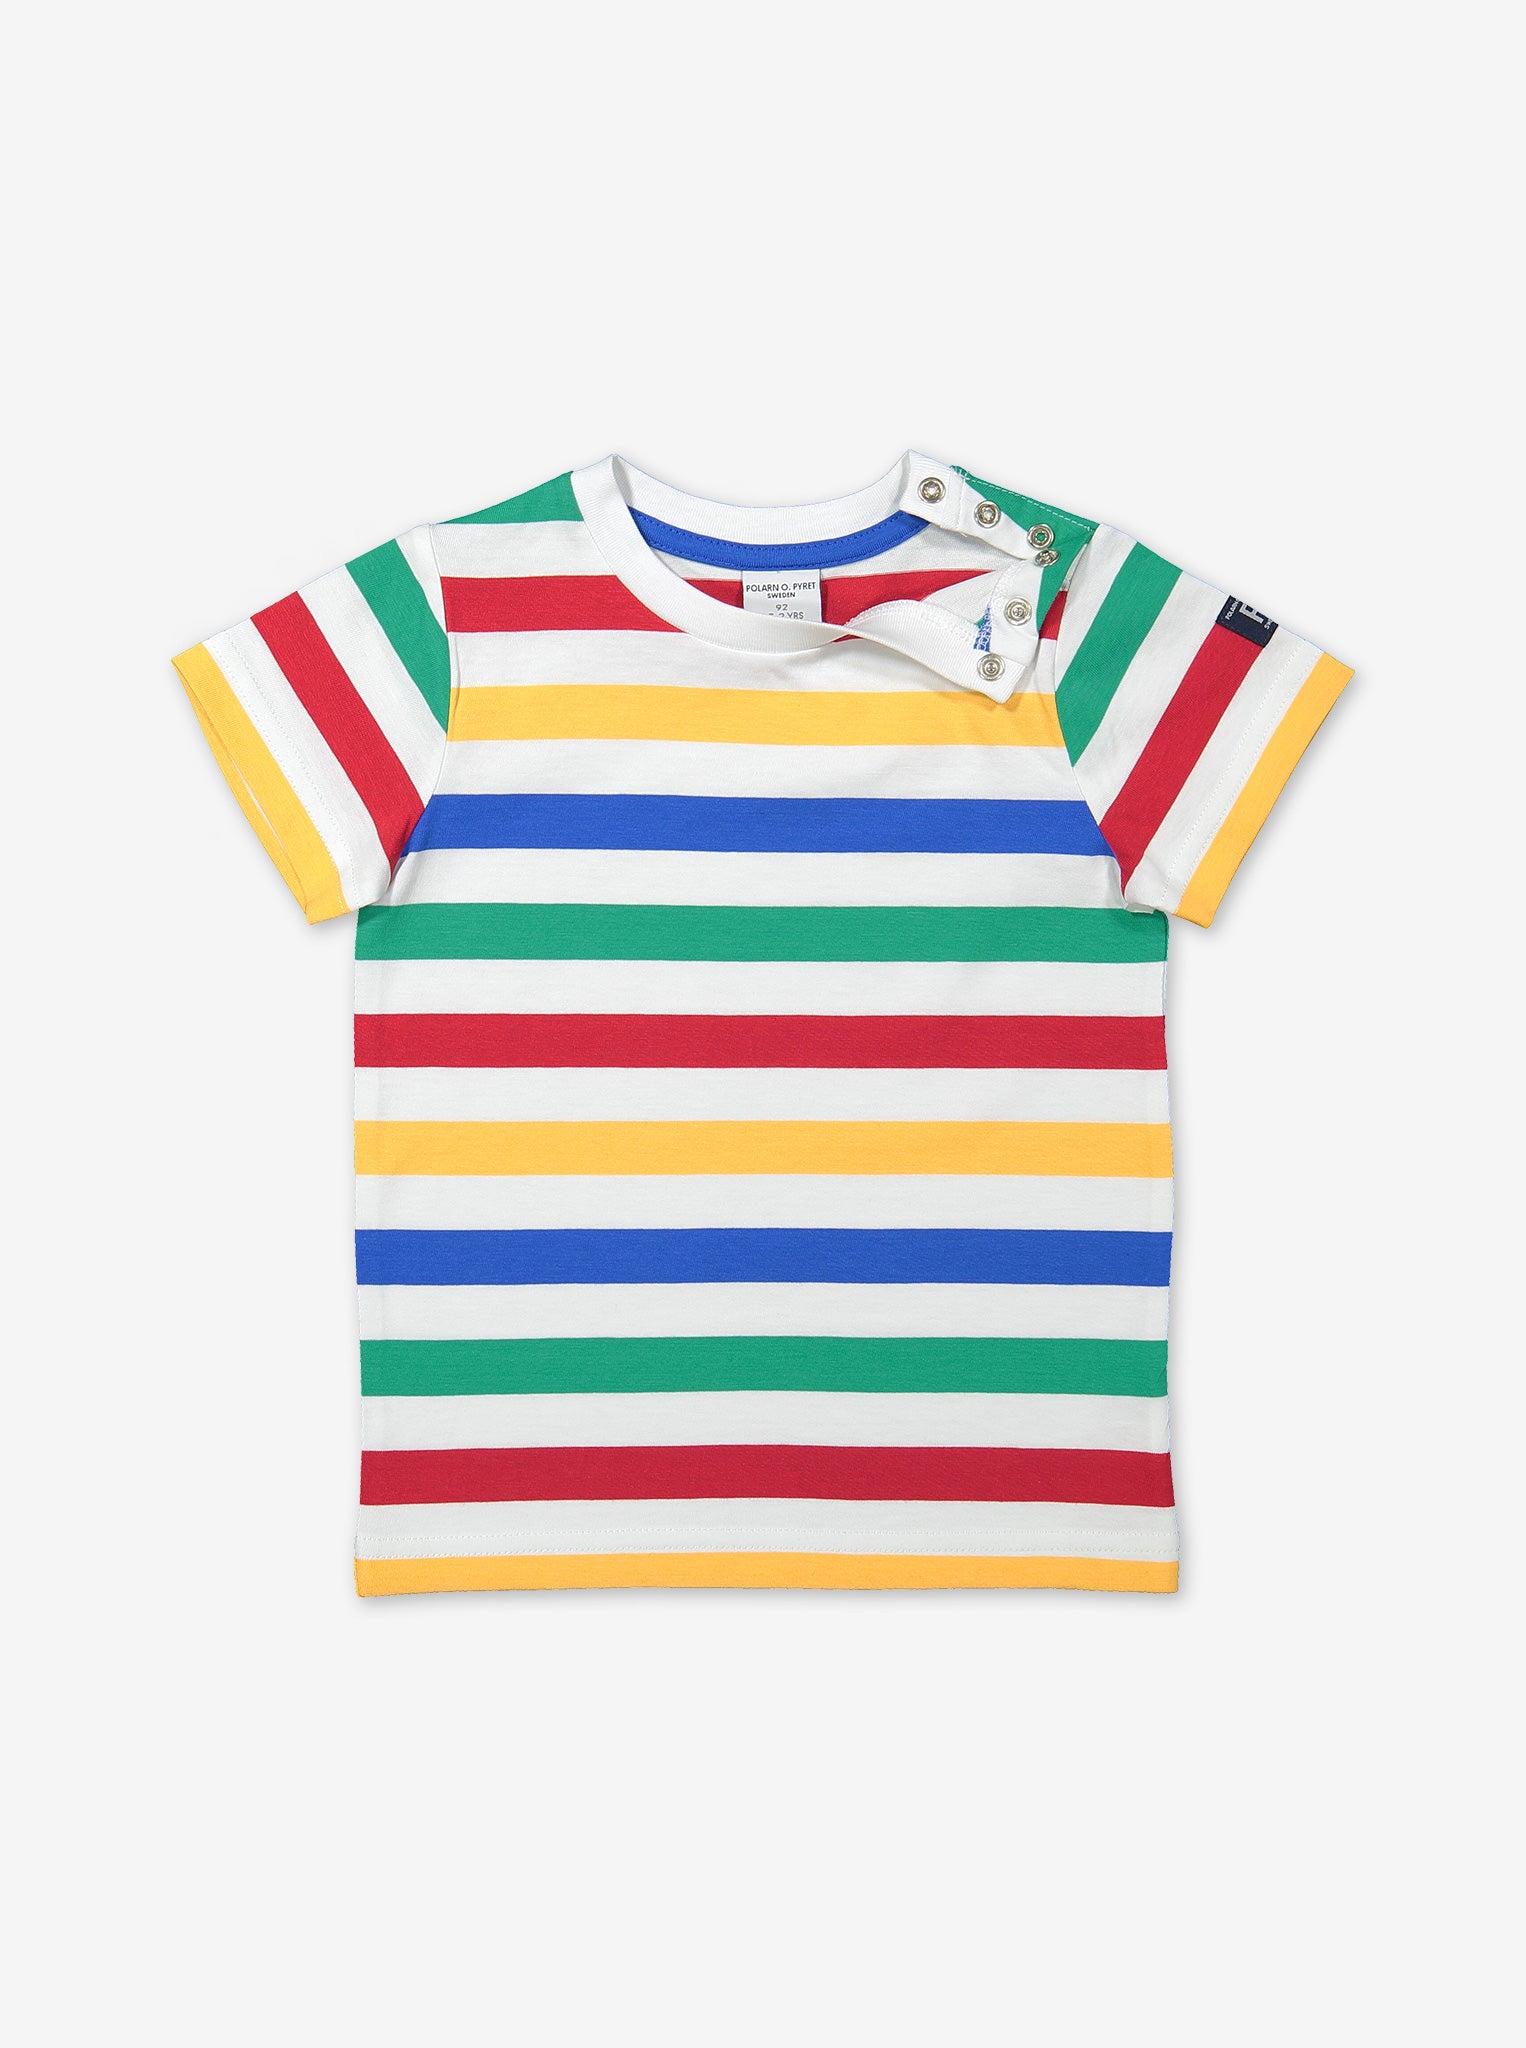 Multi Stripe Kids T-Shirt